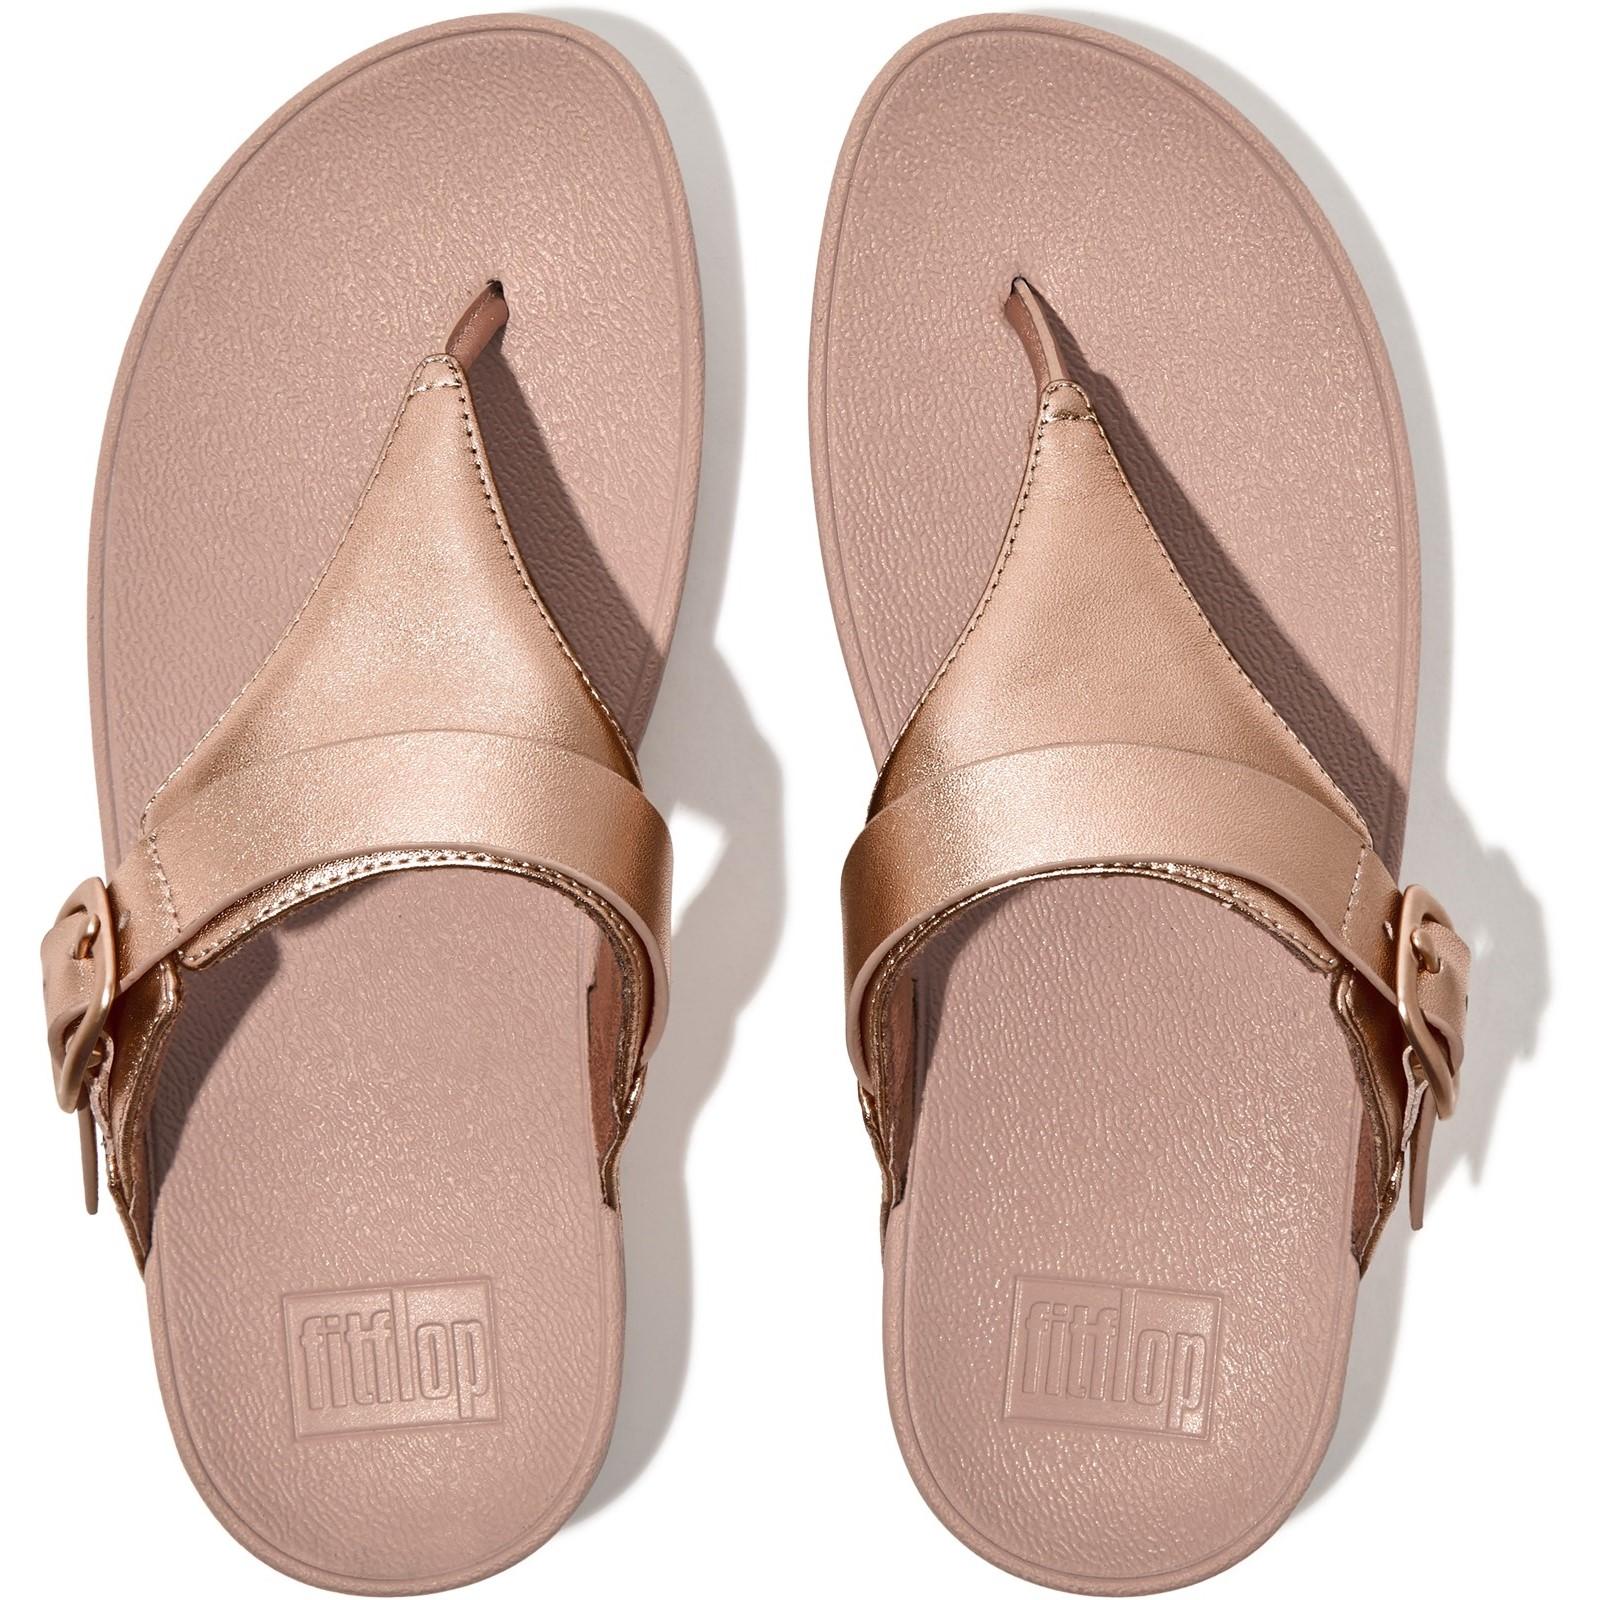 Fitflop Lulu Adjustable Toe Post Sandals